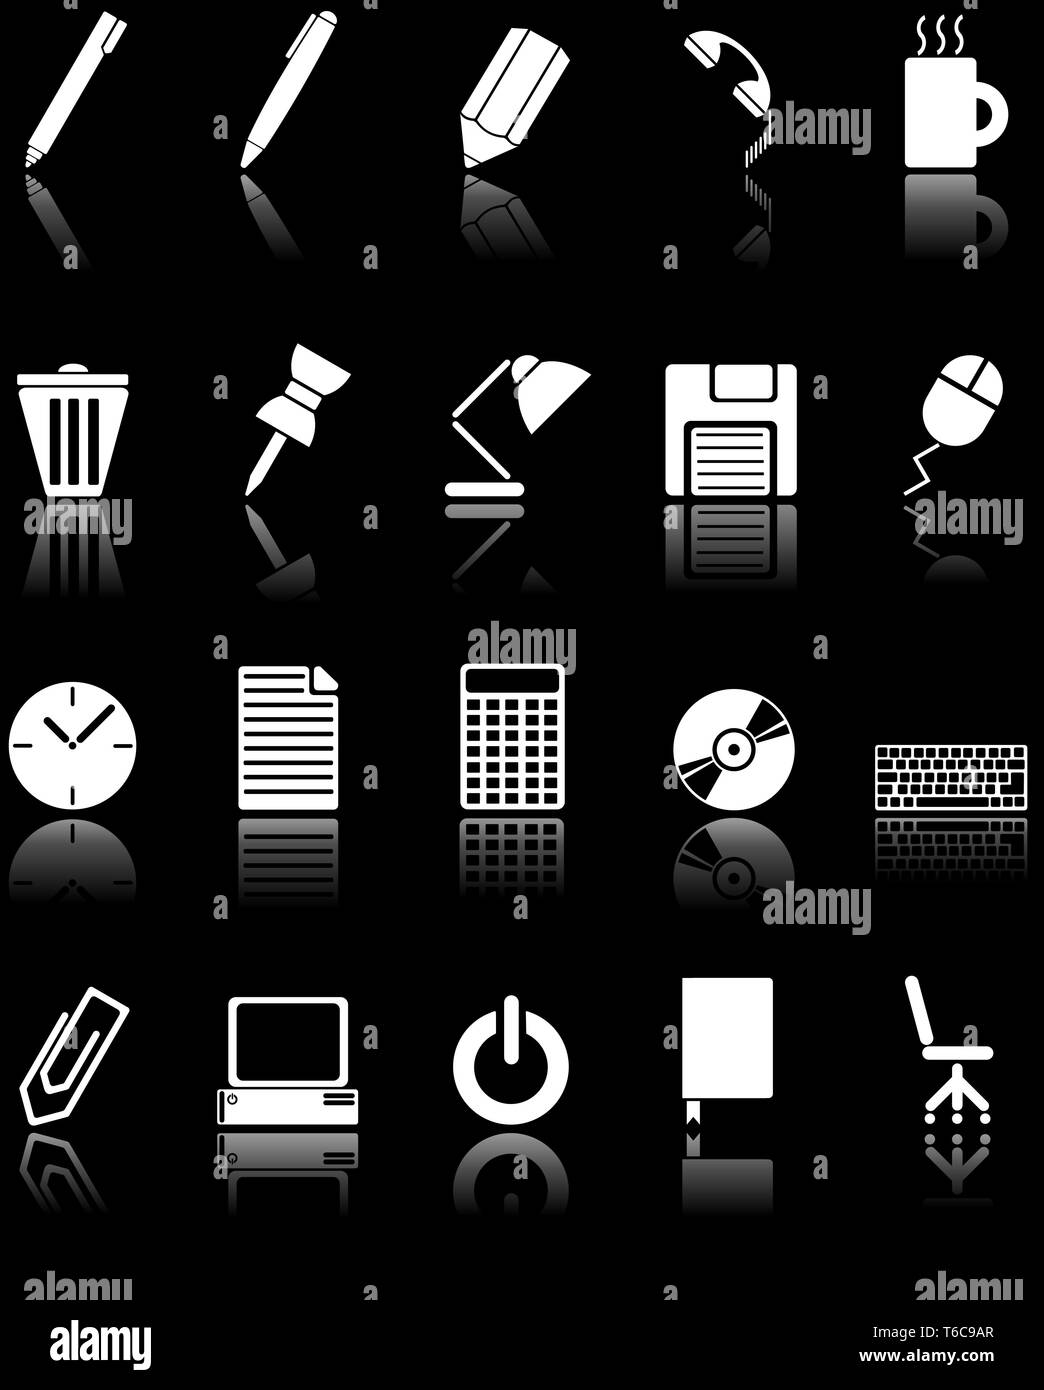 Web icons - Office utensils Stock Photo